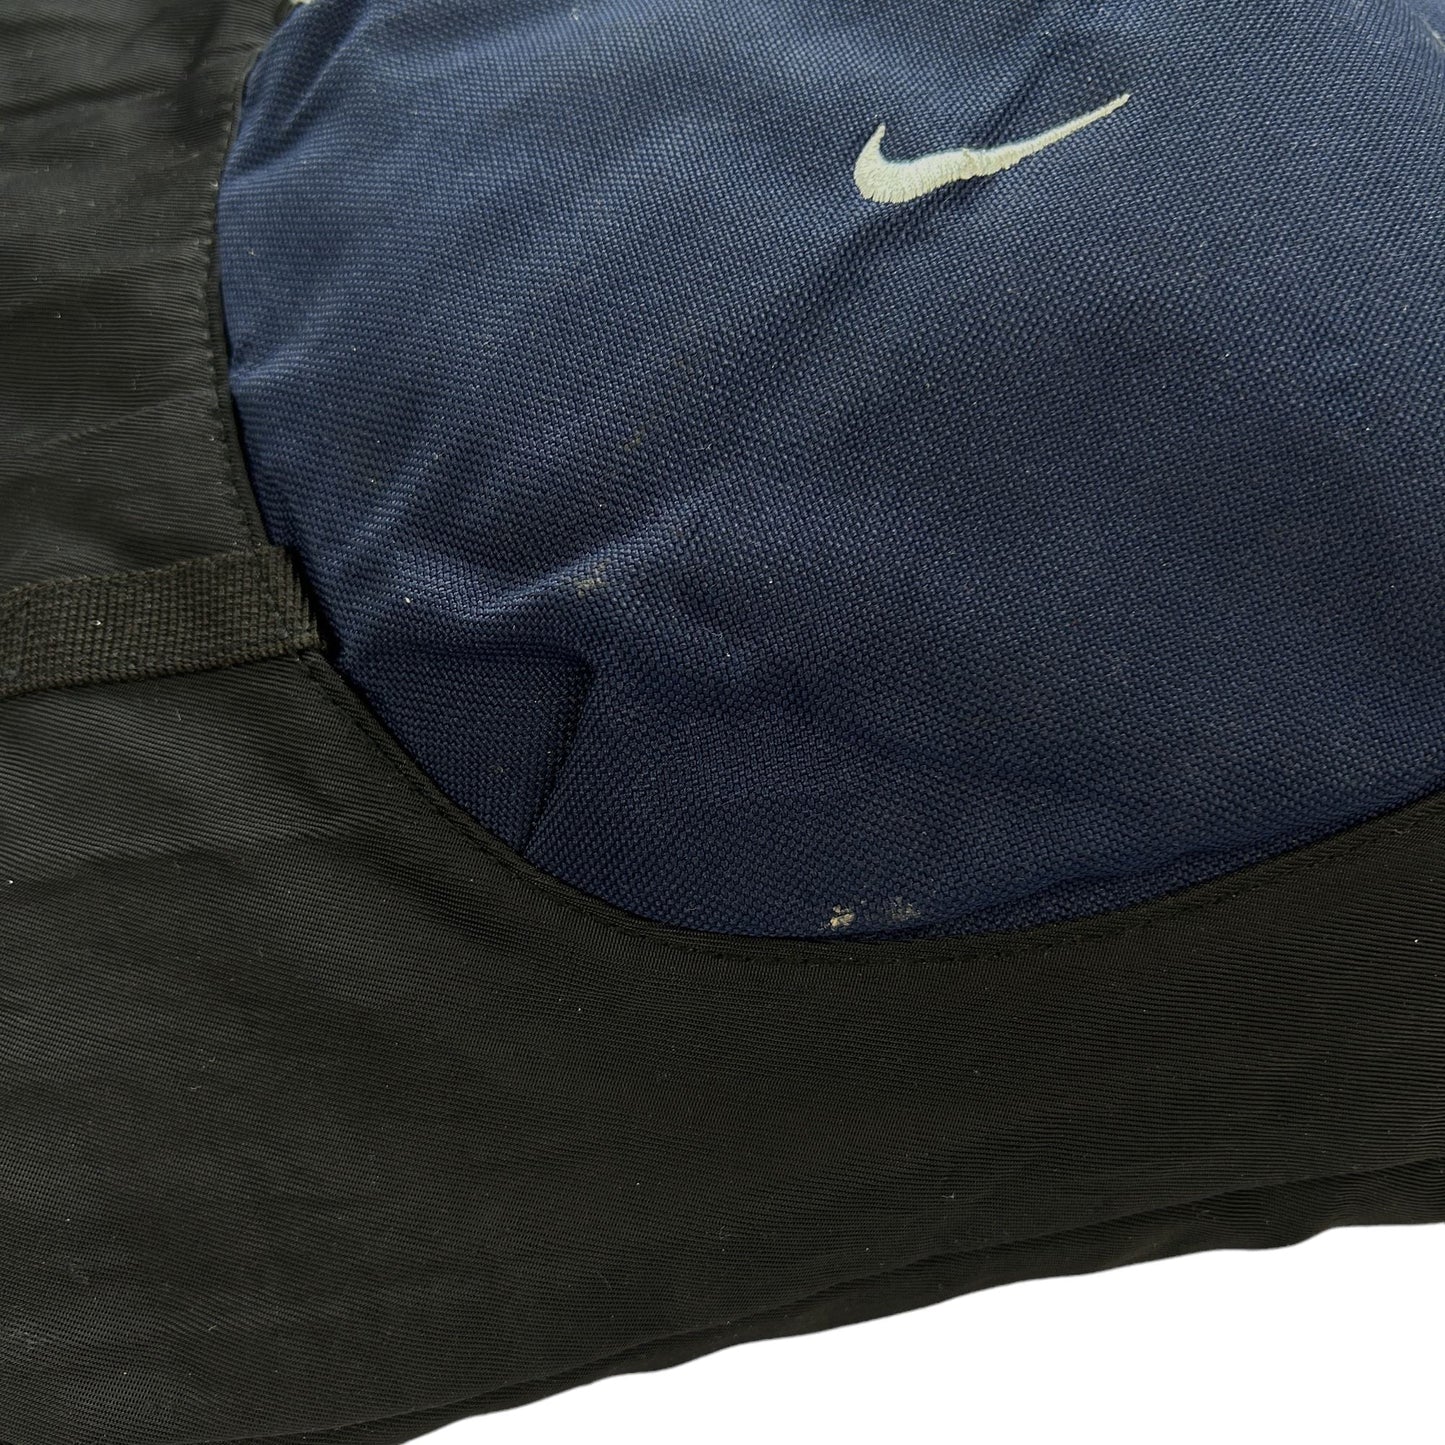 Vintage Nike Cross Body Bag